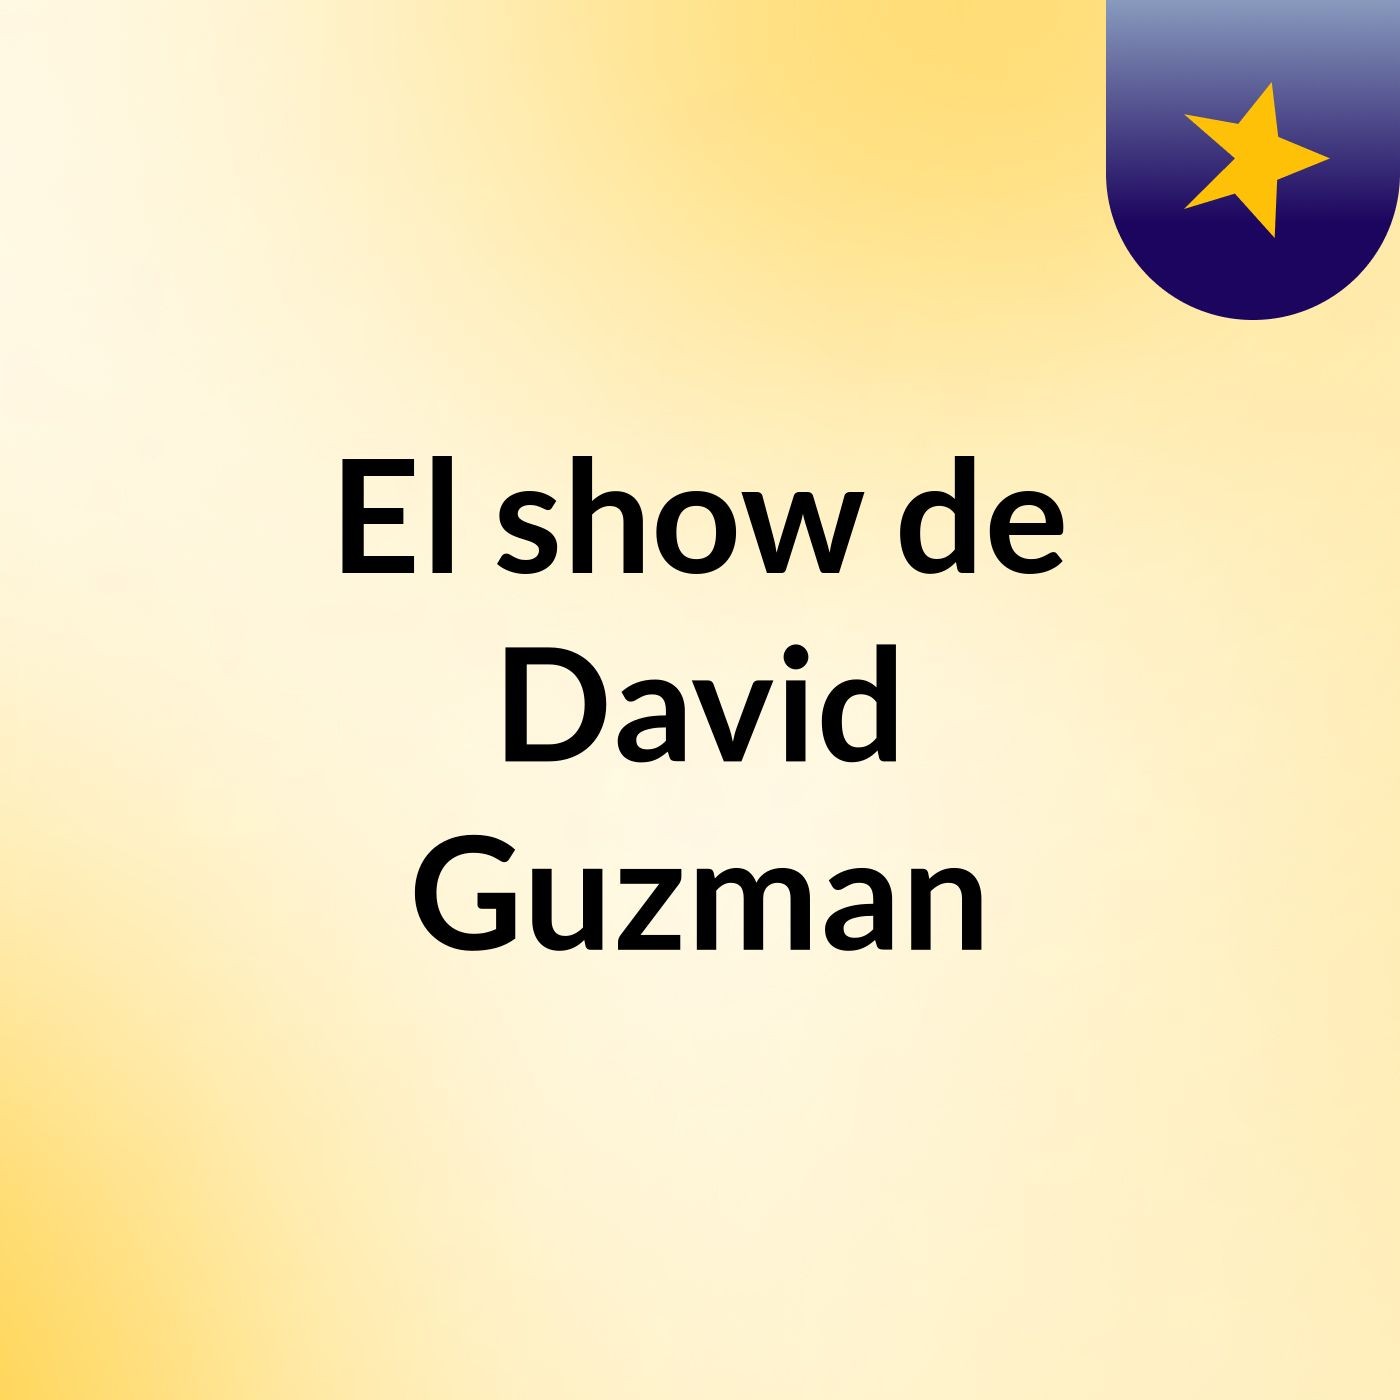 El show de David Guzman